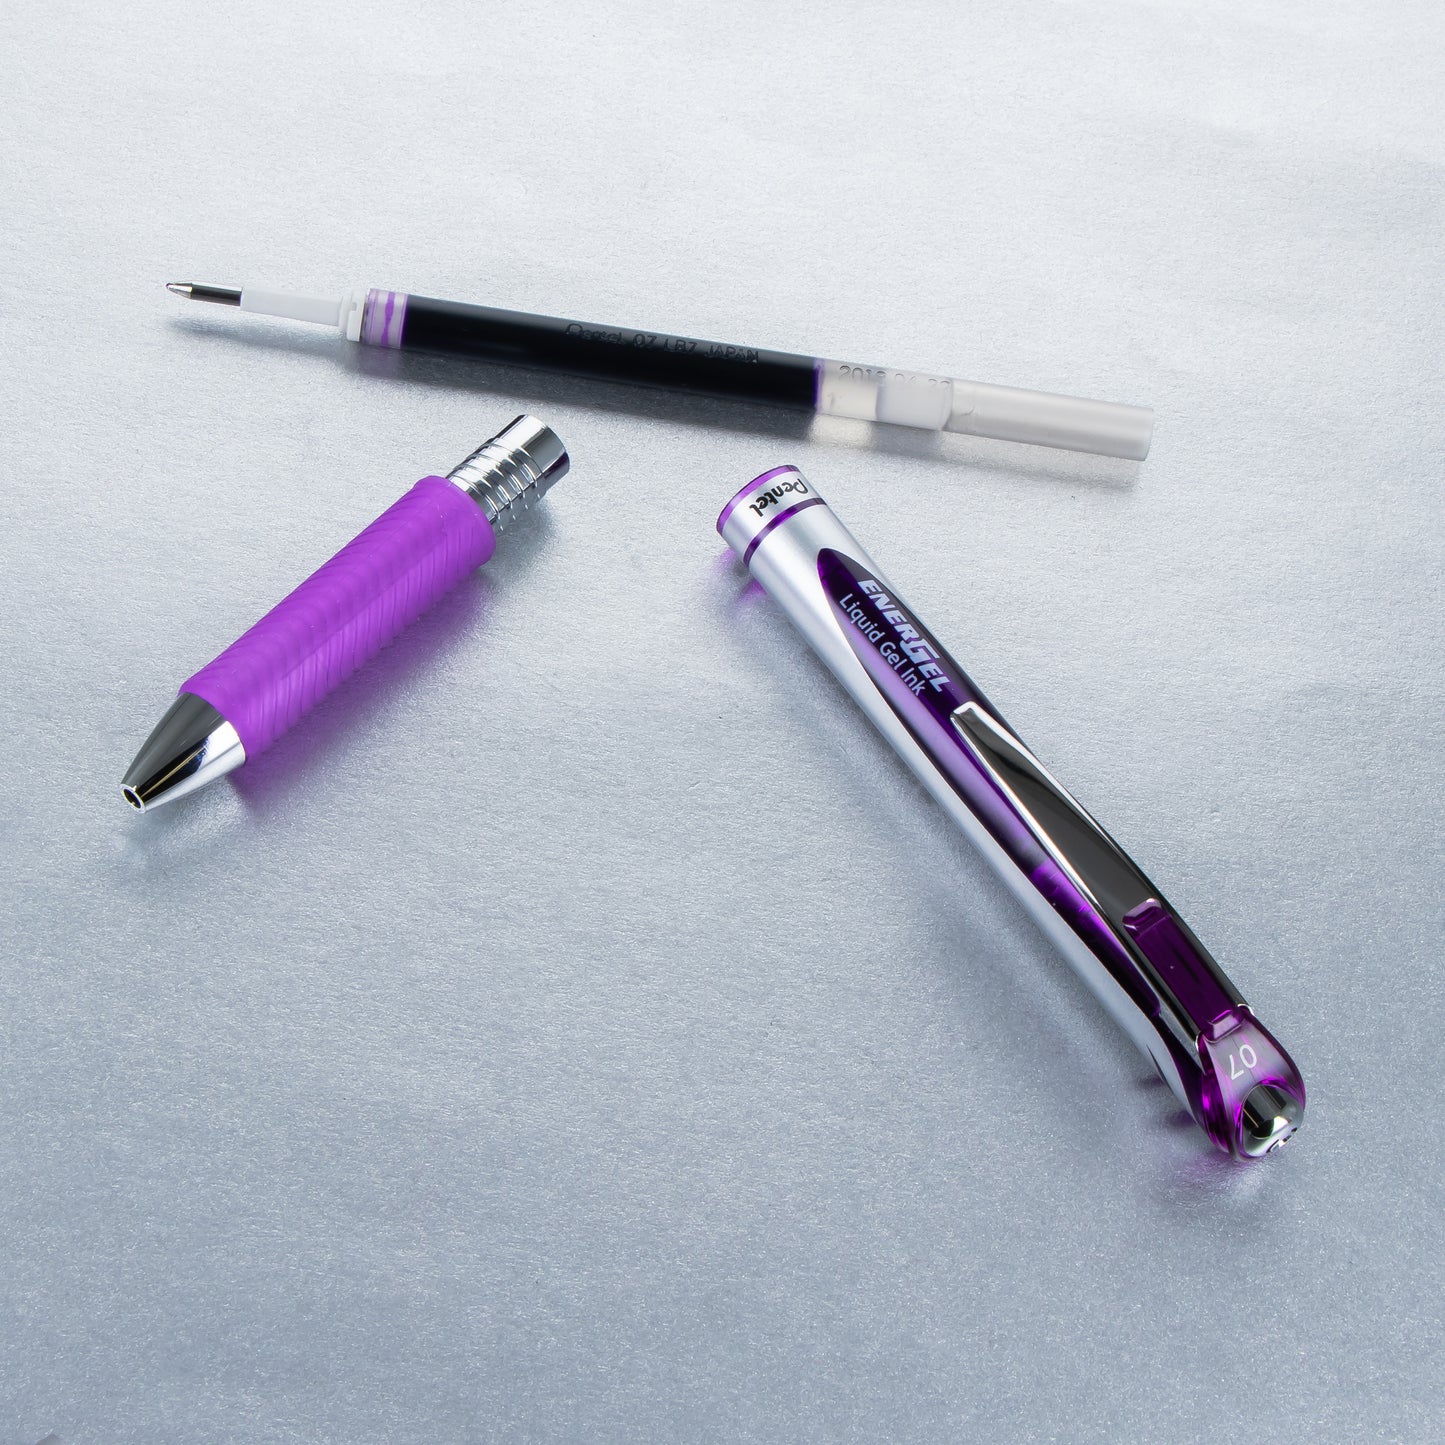 EnerGel RTX Refillable Gel Pen, Violet Ink 3-pk